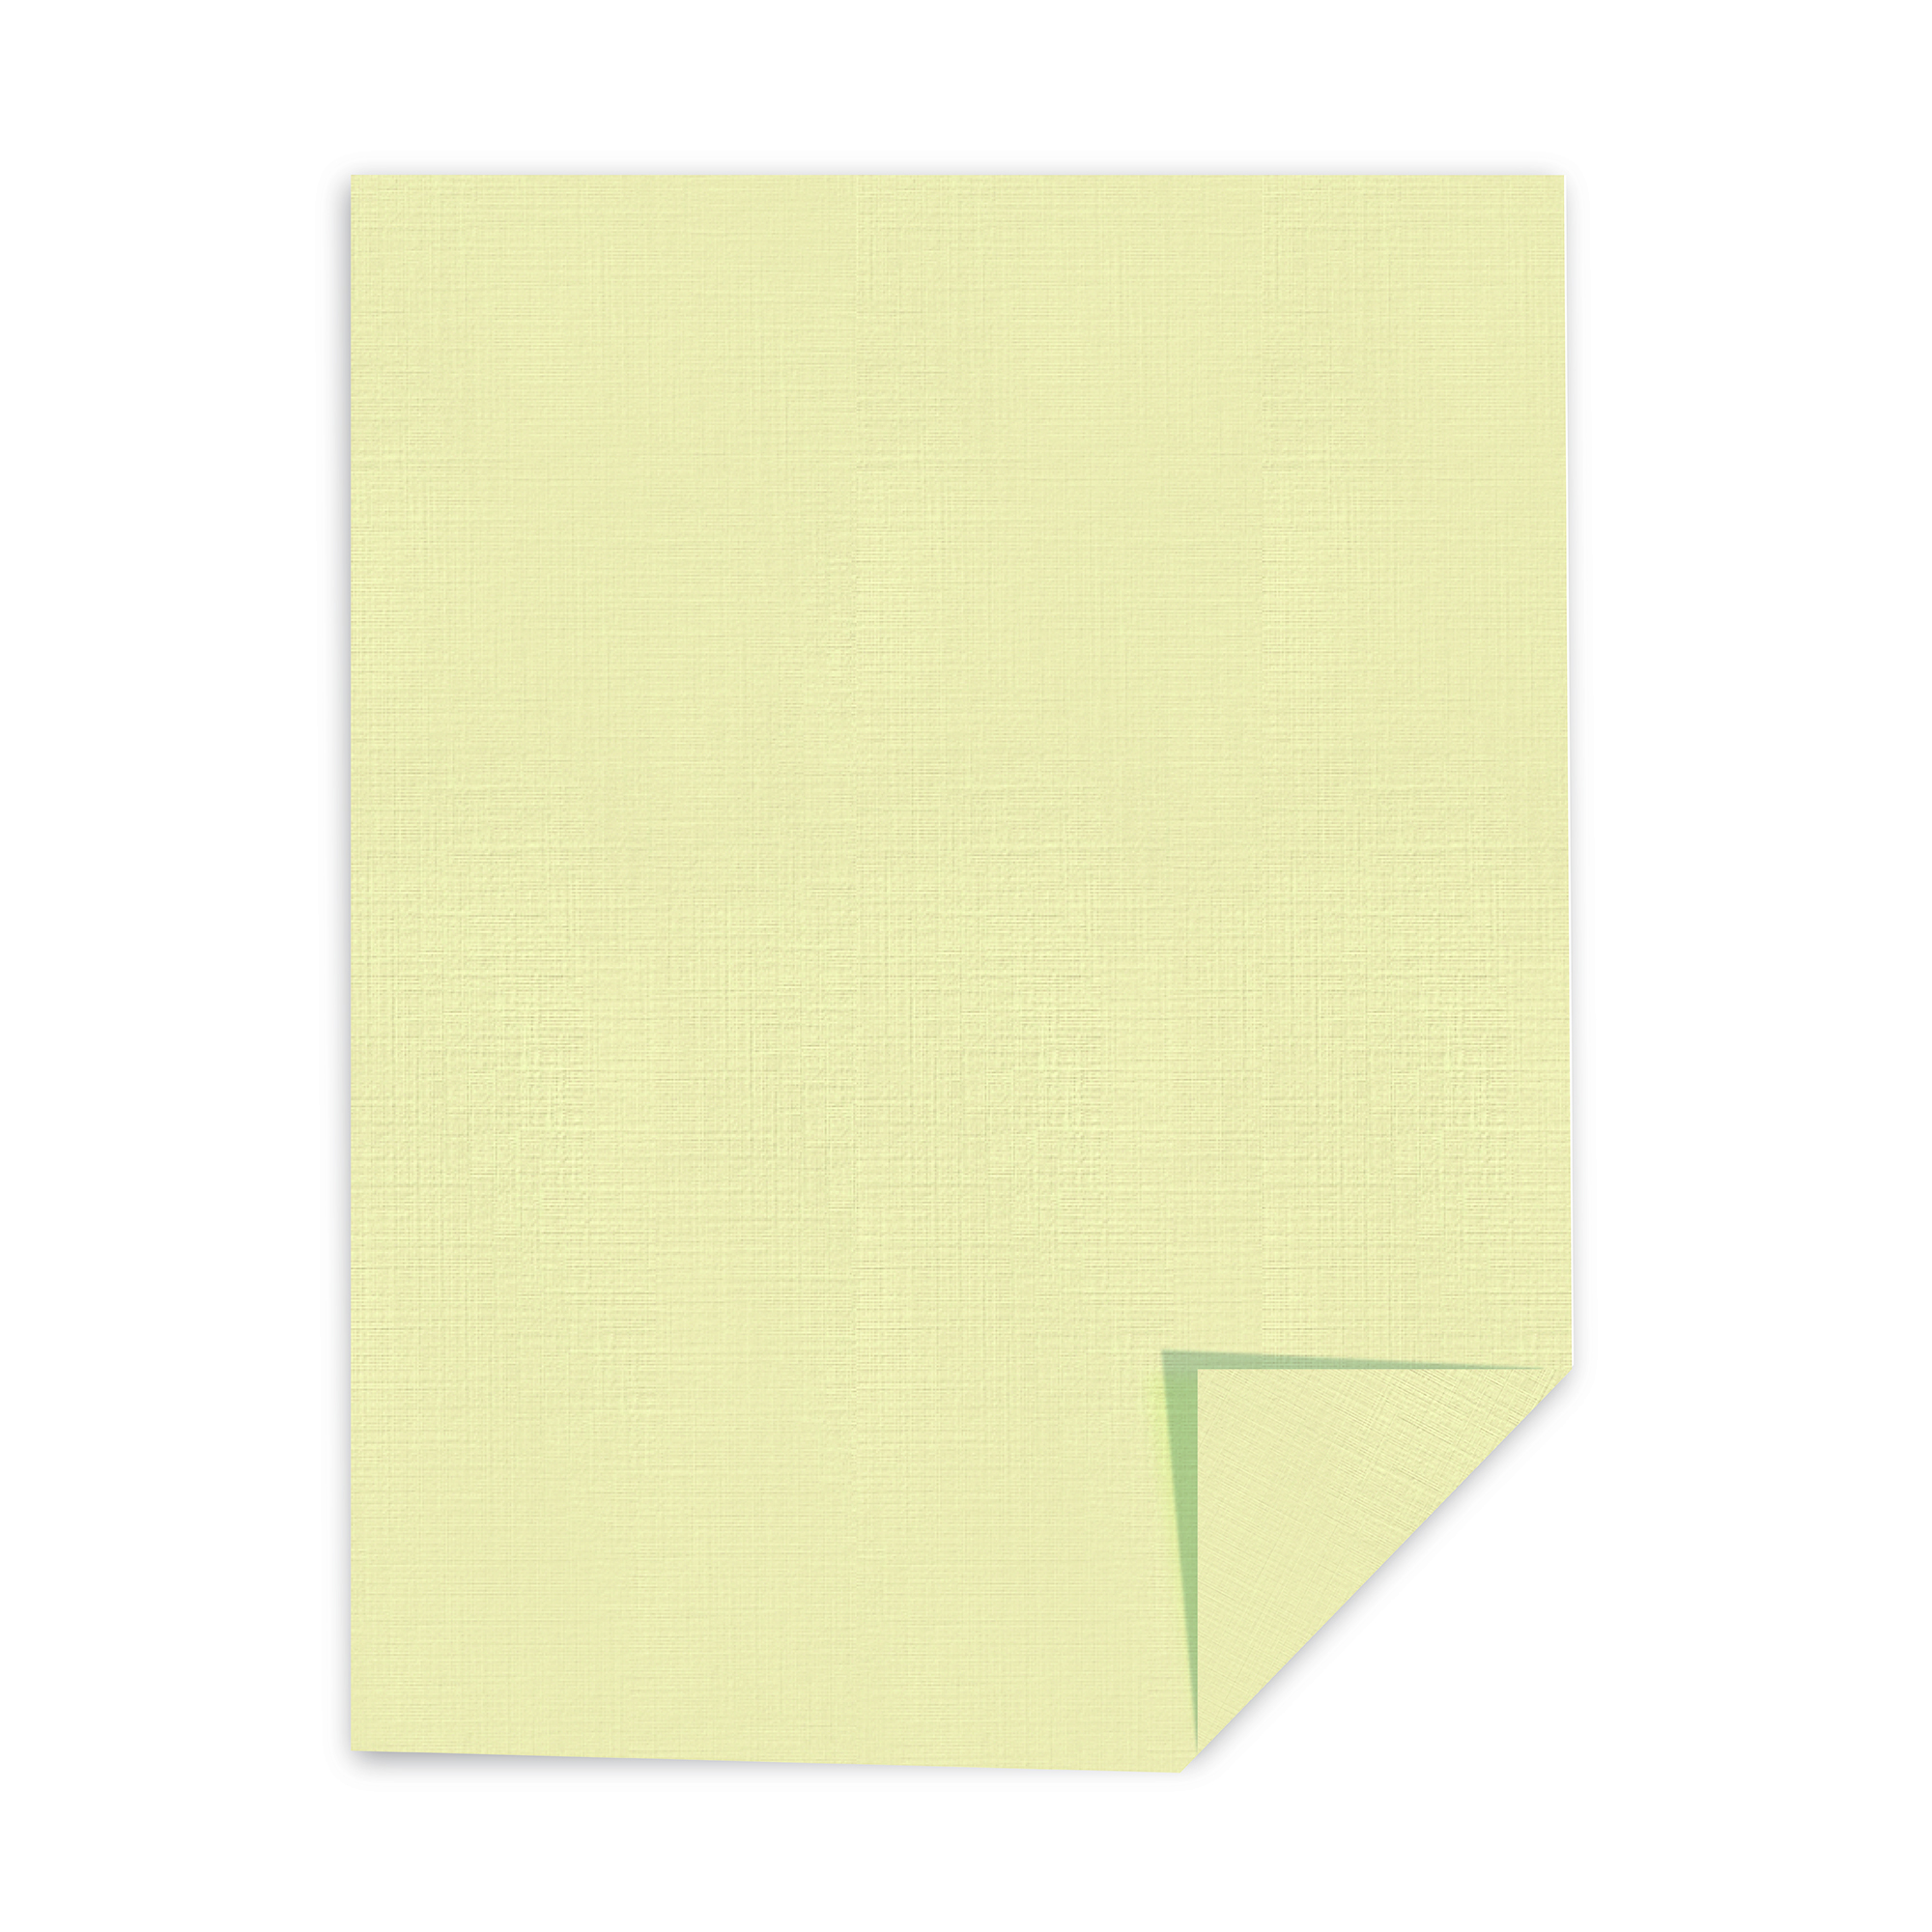 Southworth Fine Linen Paper 25 Piece 8-1/2 X 11 24lb Weight